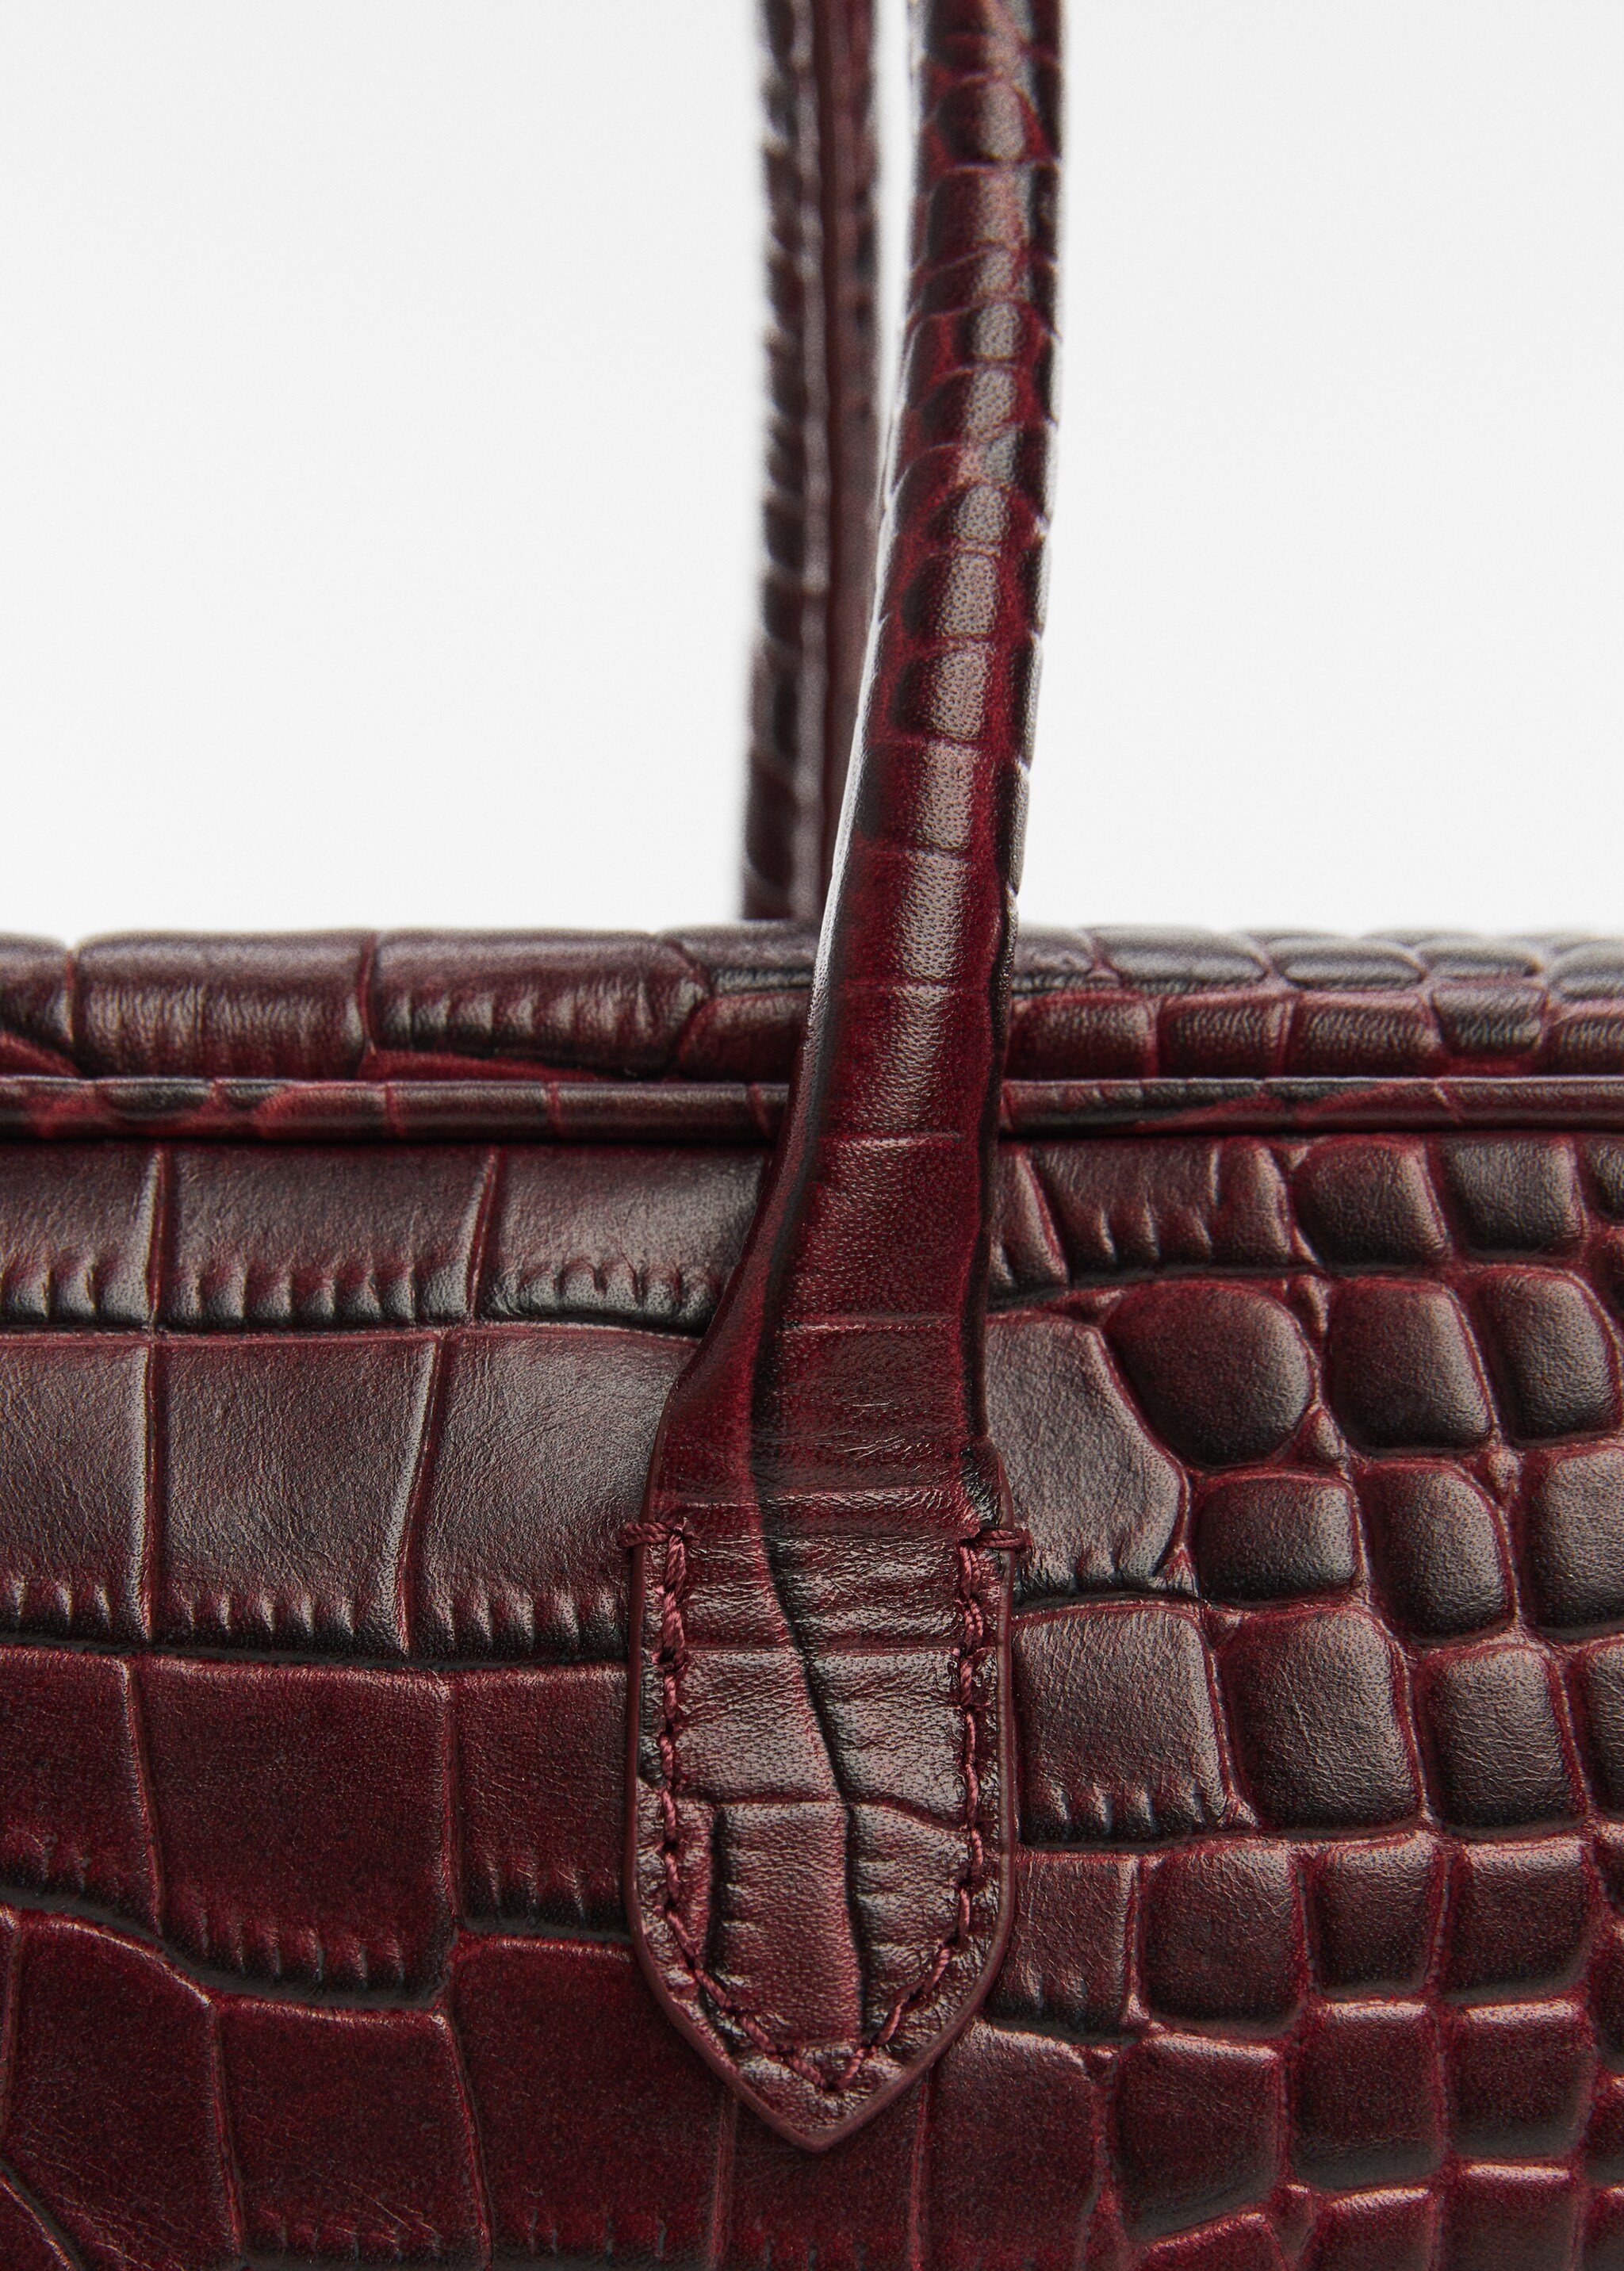 Rectangular leather handbag - Details of the article 3